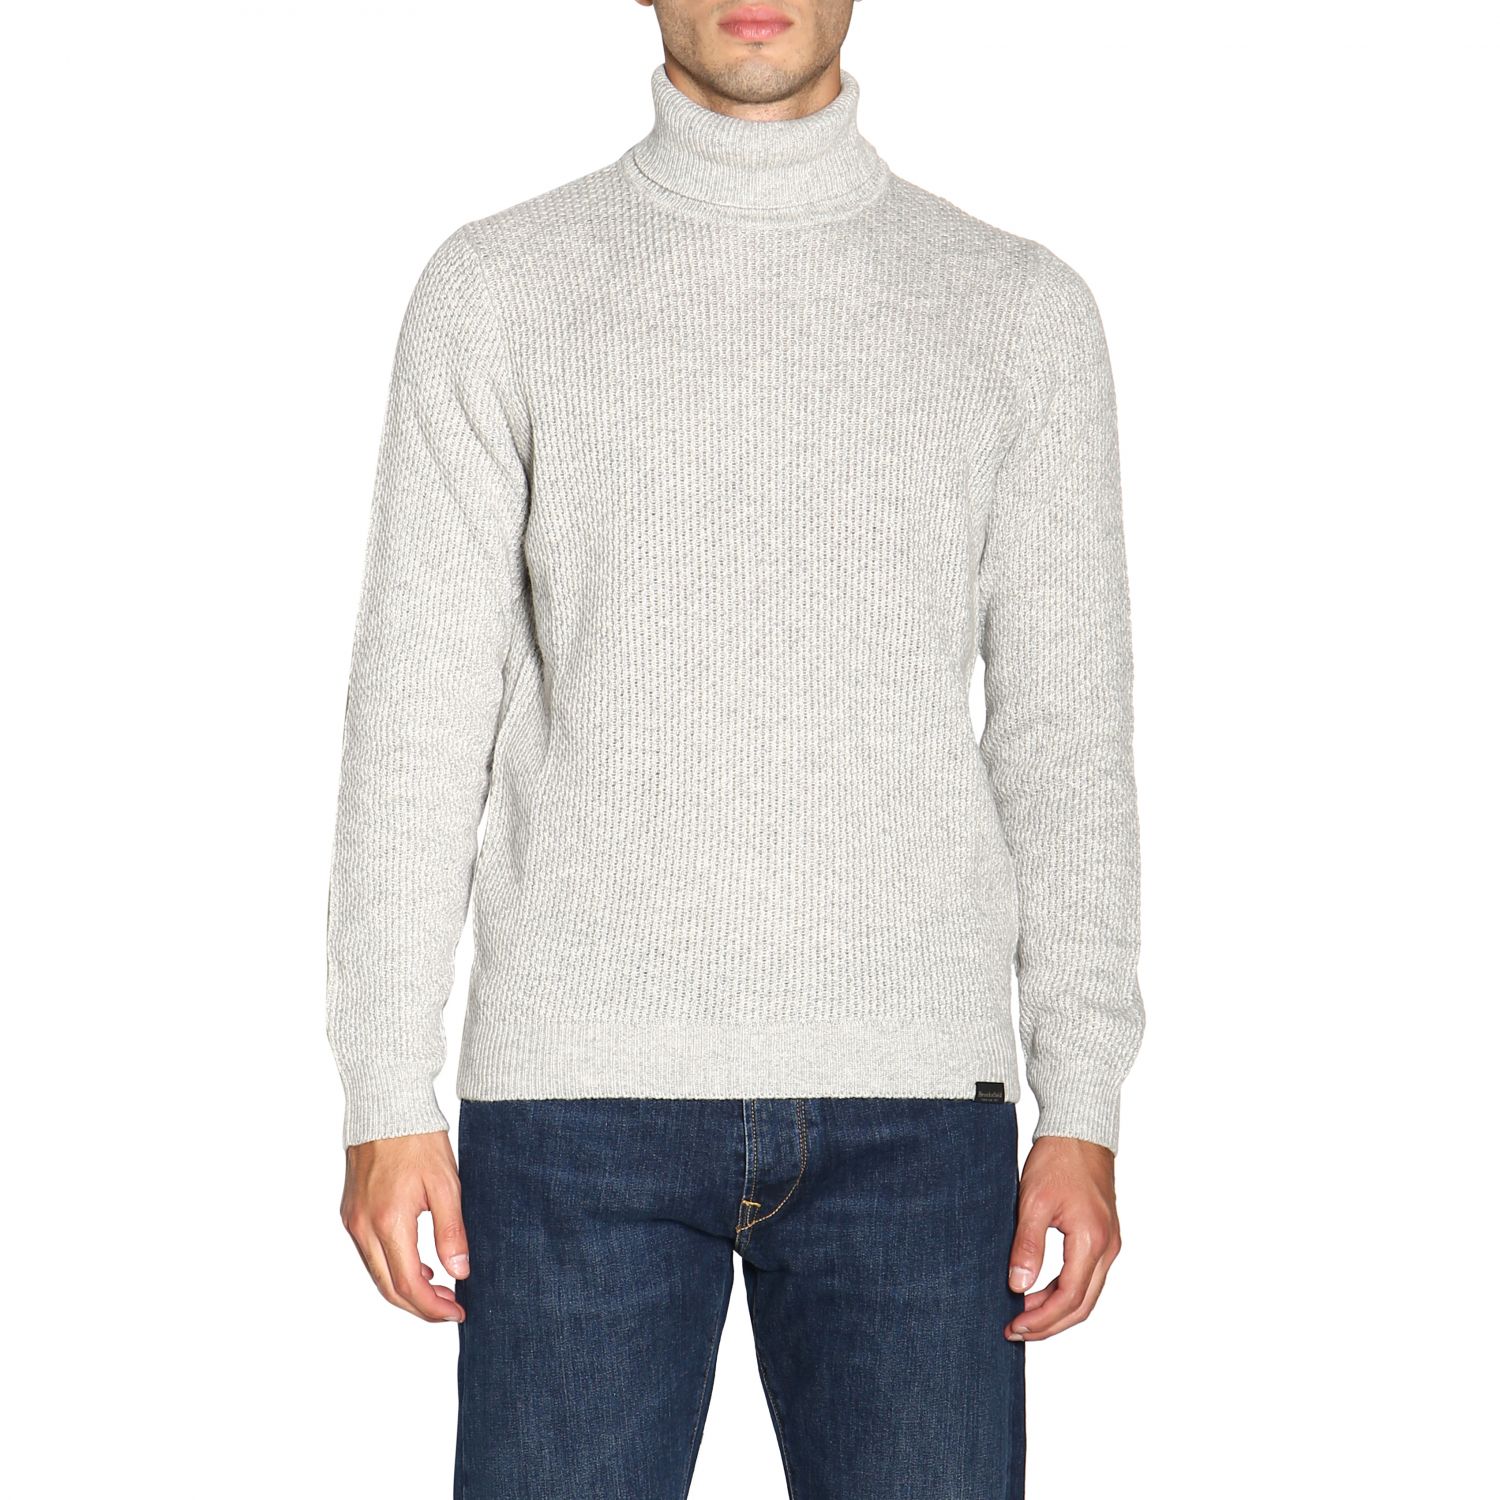 Brooksfield Outlet: Sweater men - Grey | Sweater Brooksfield 203H R003 ...